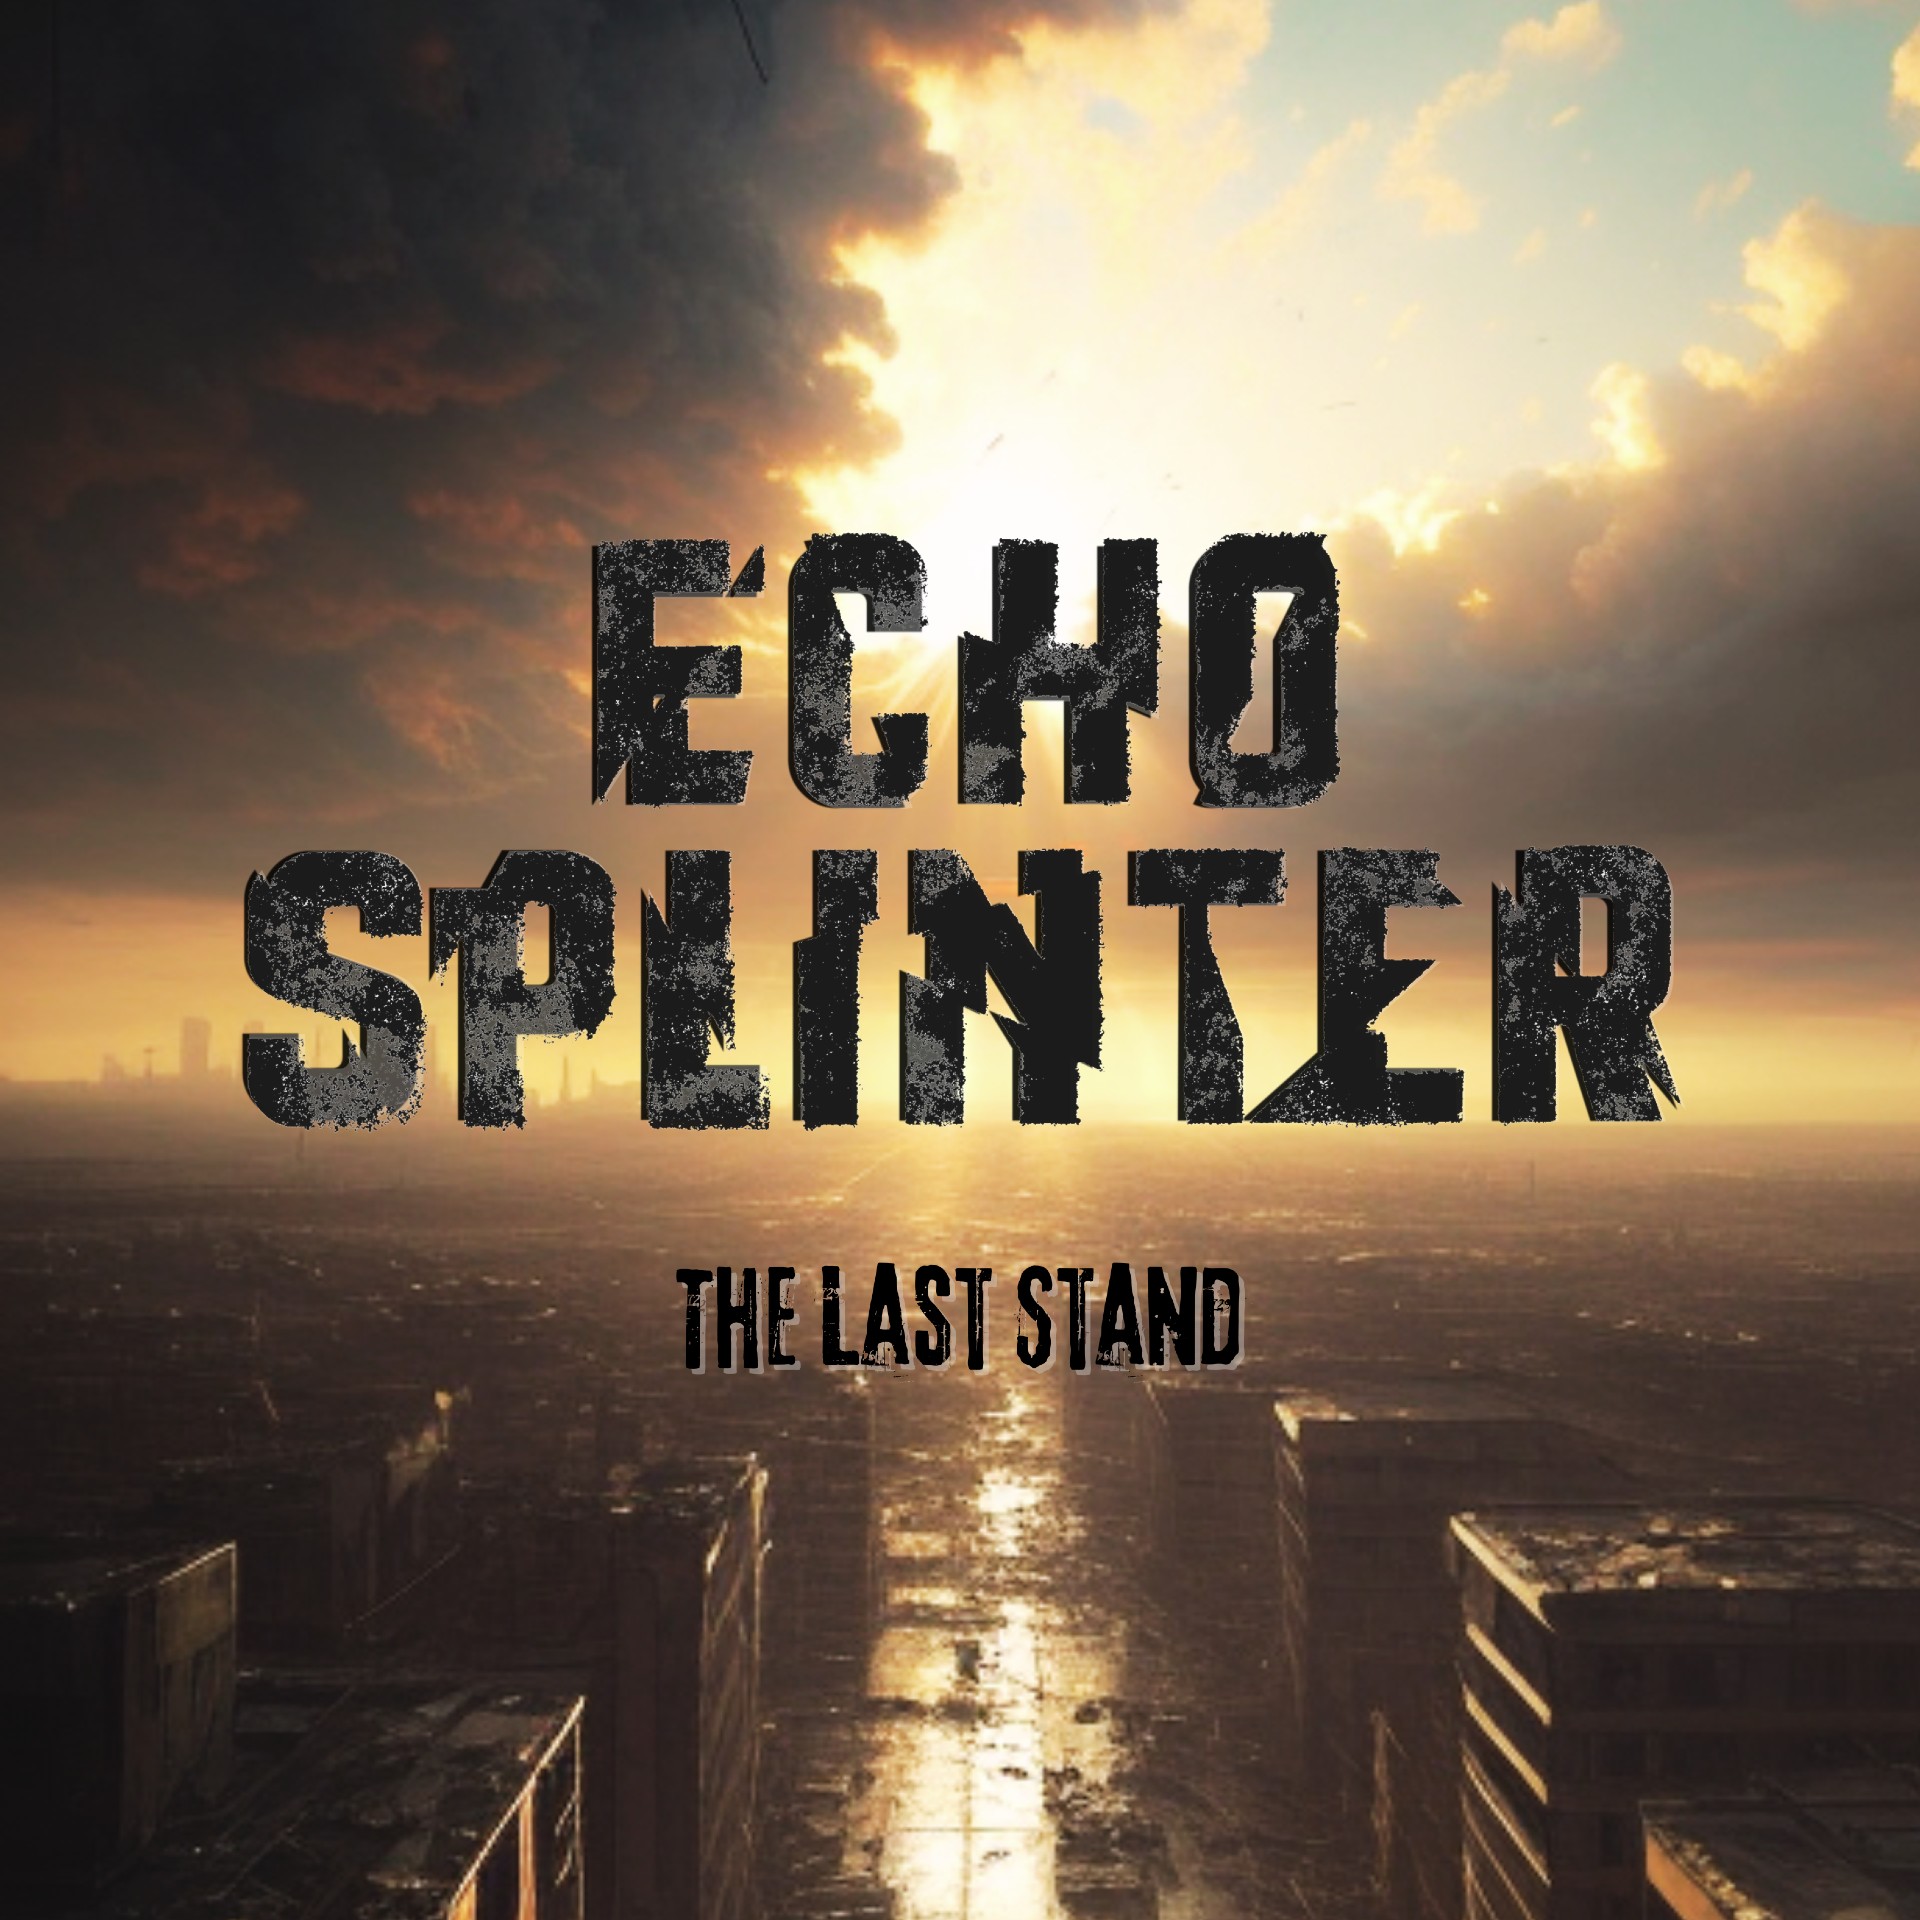 Echo Splinter ‘The Last Stand’ EP album artwork